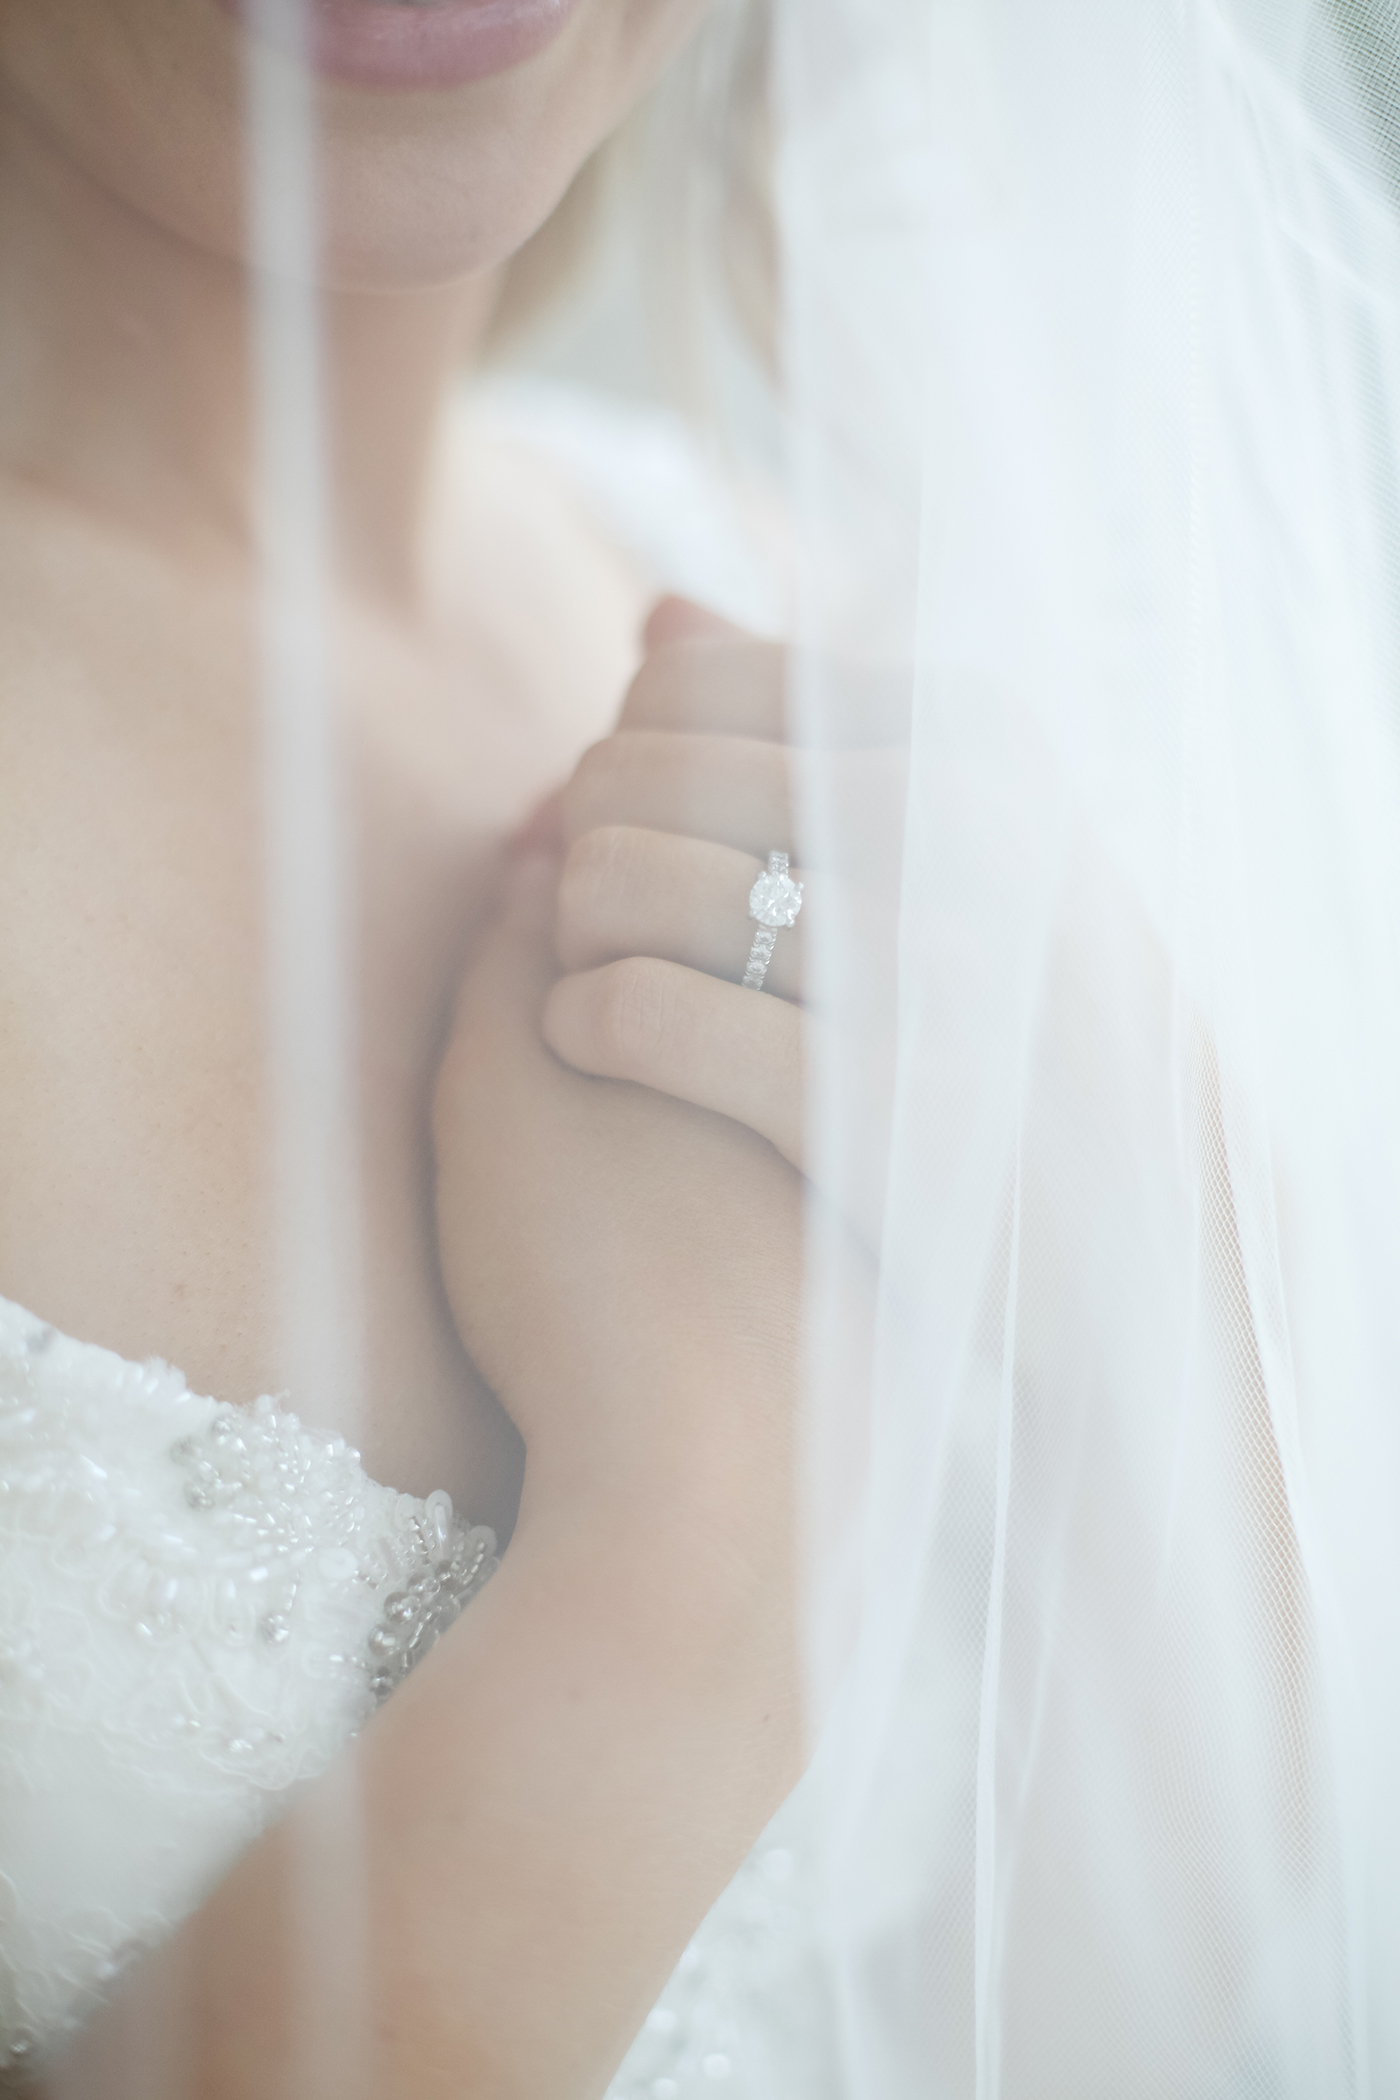 Dallas Wedding Planners: A Stylish Soiree | Emily's Bridal Portraits